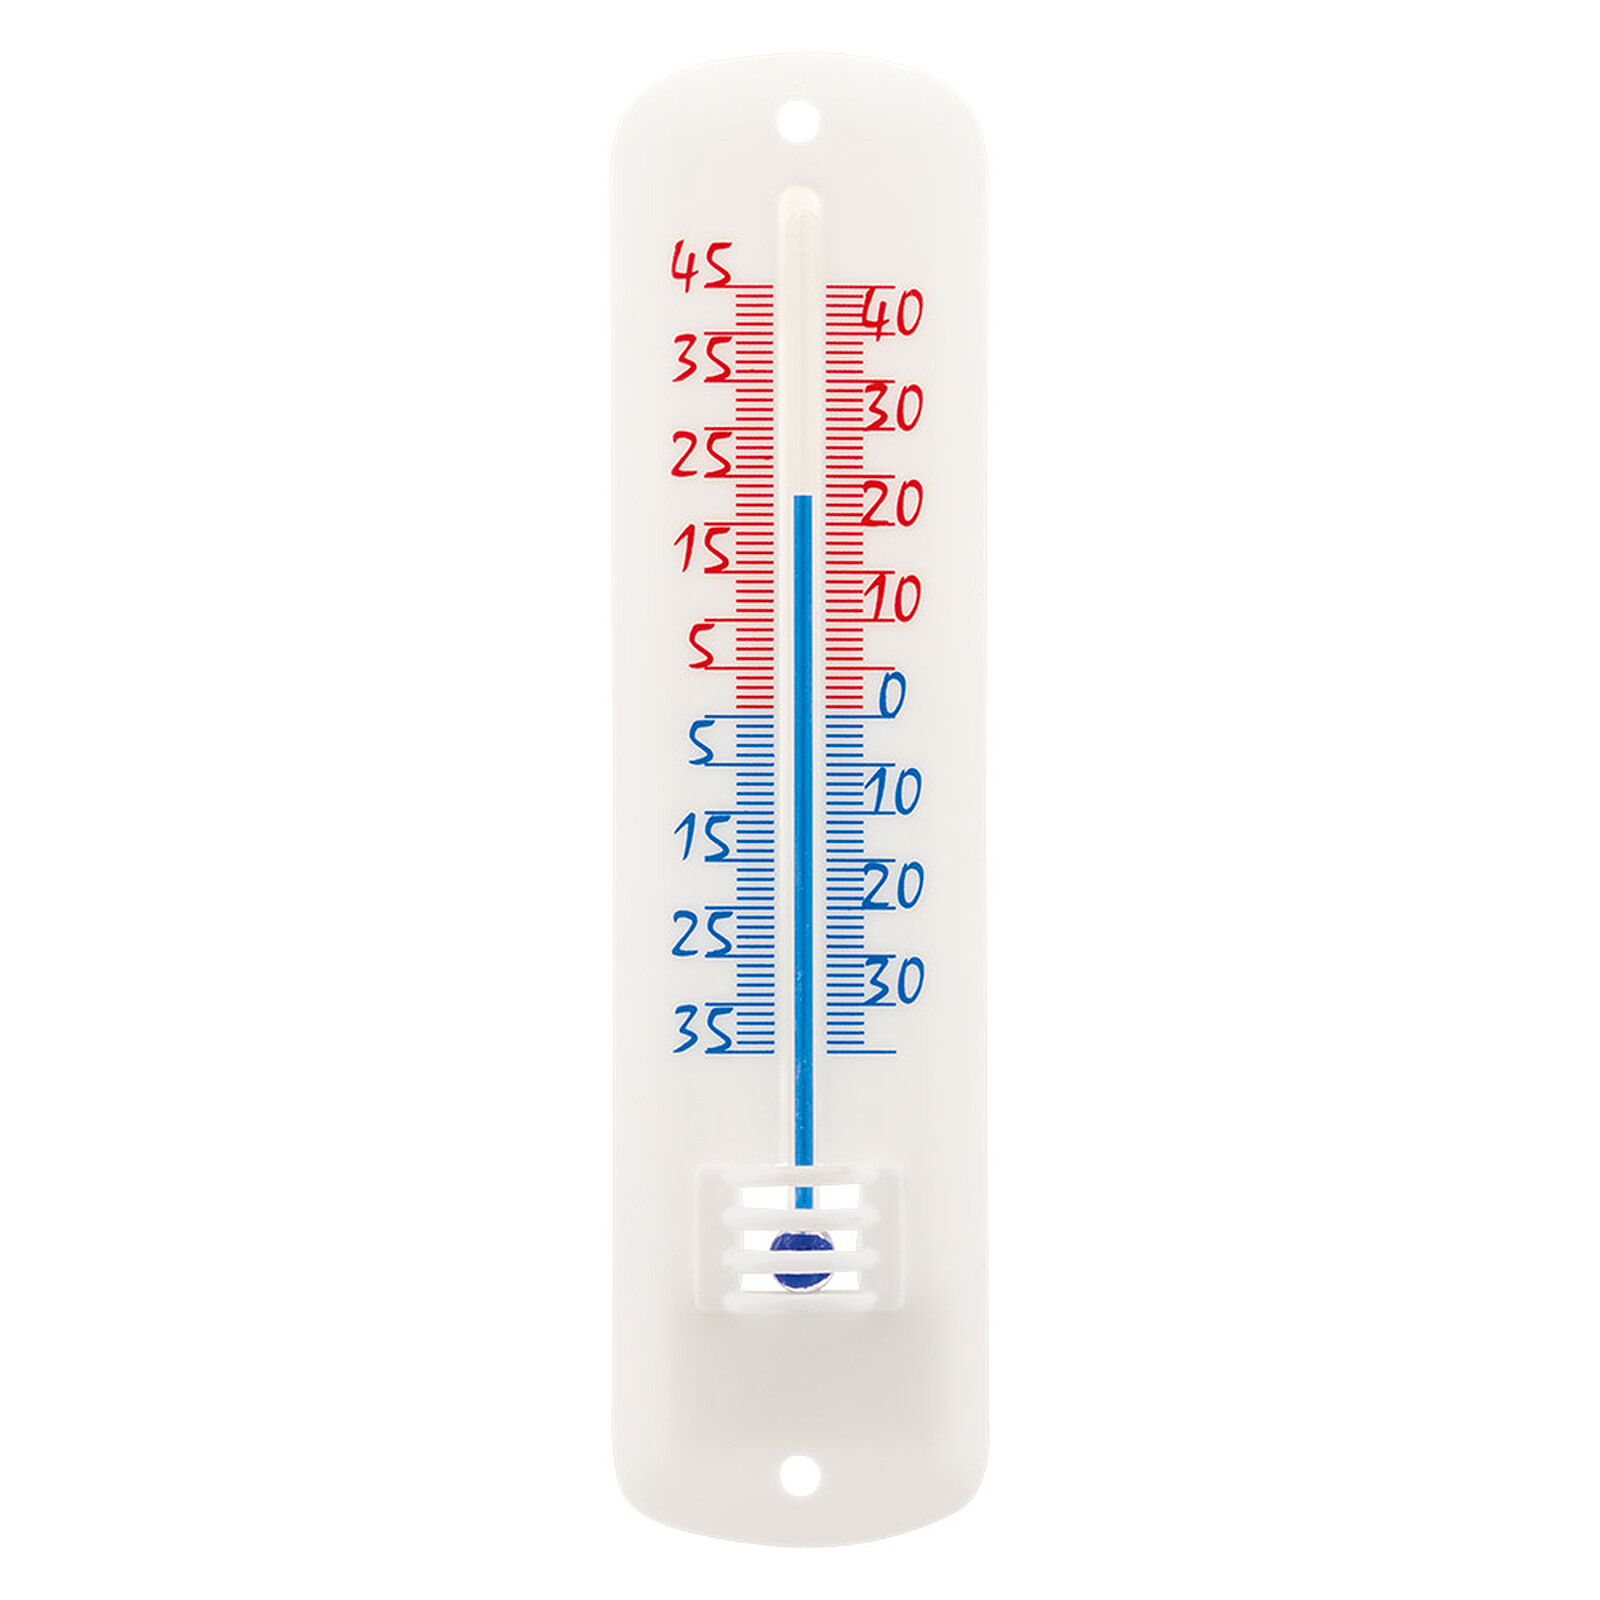  Thermomètre int/ext sans fil Blanc